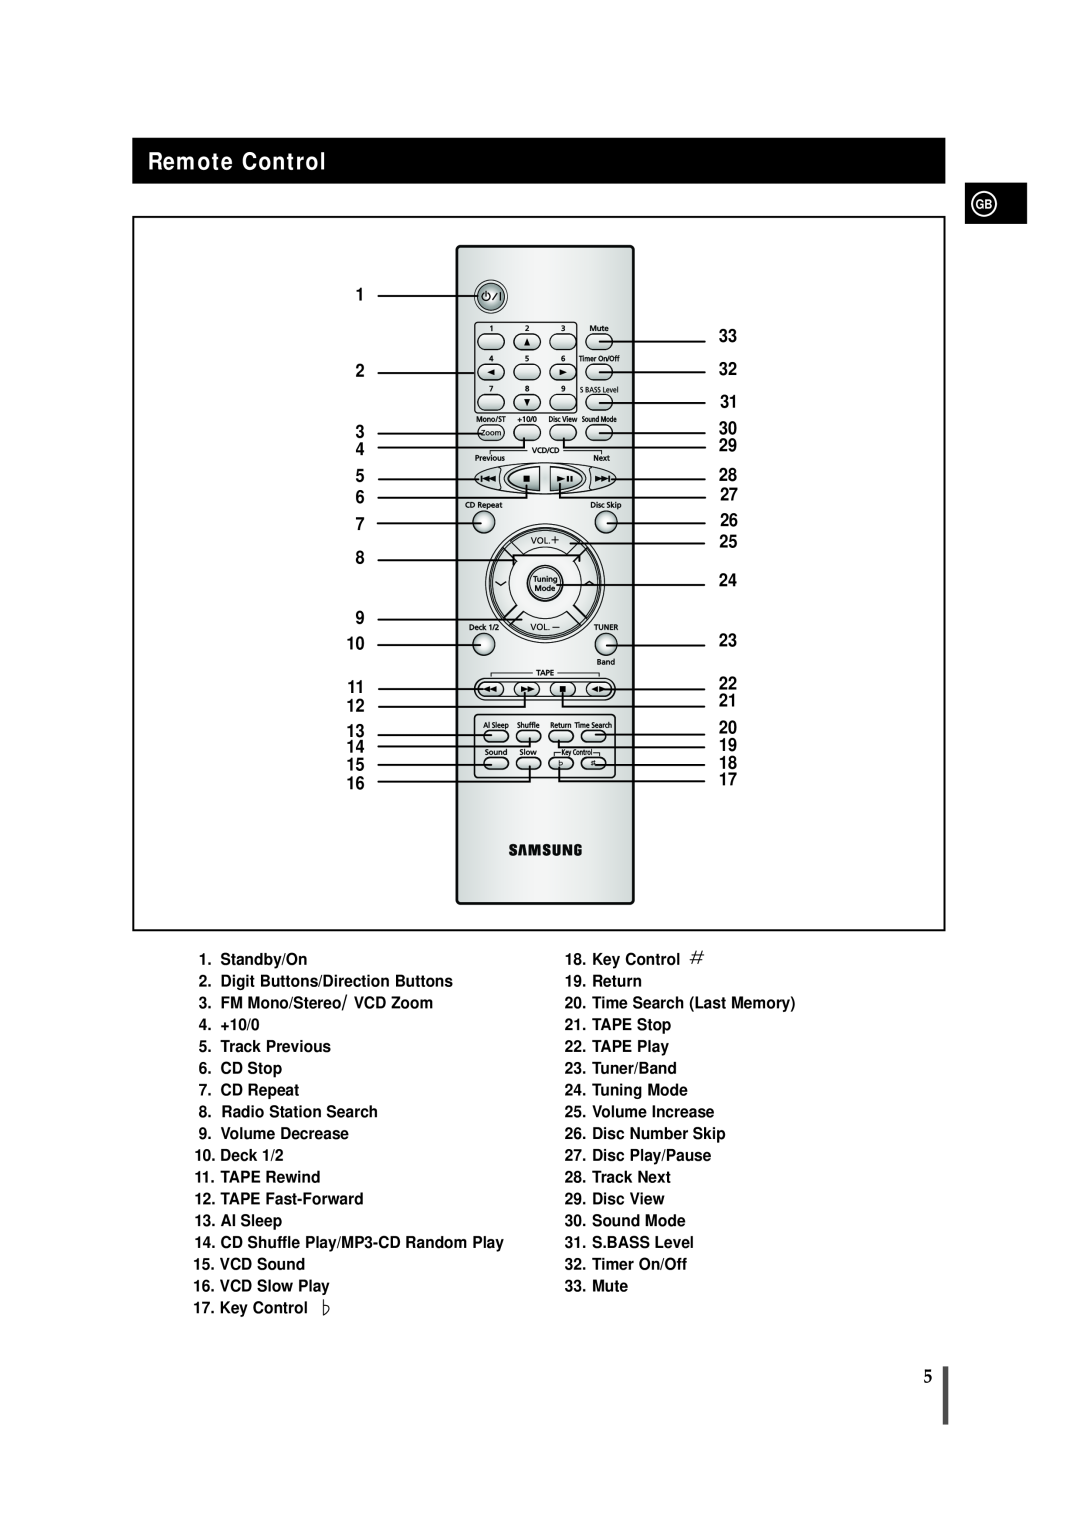 Samsung AH68-01145B, MAX-VB550 instruction manual Remote Control, Time Search Last Memory 